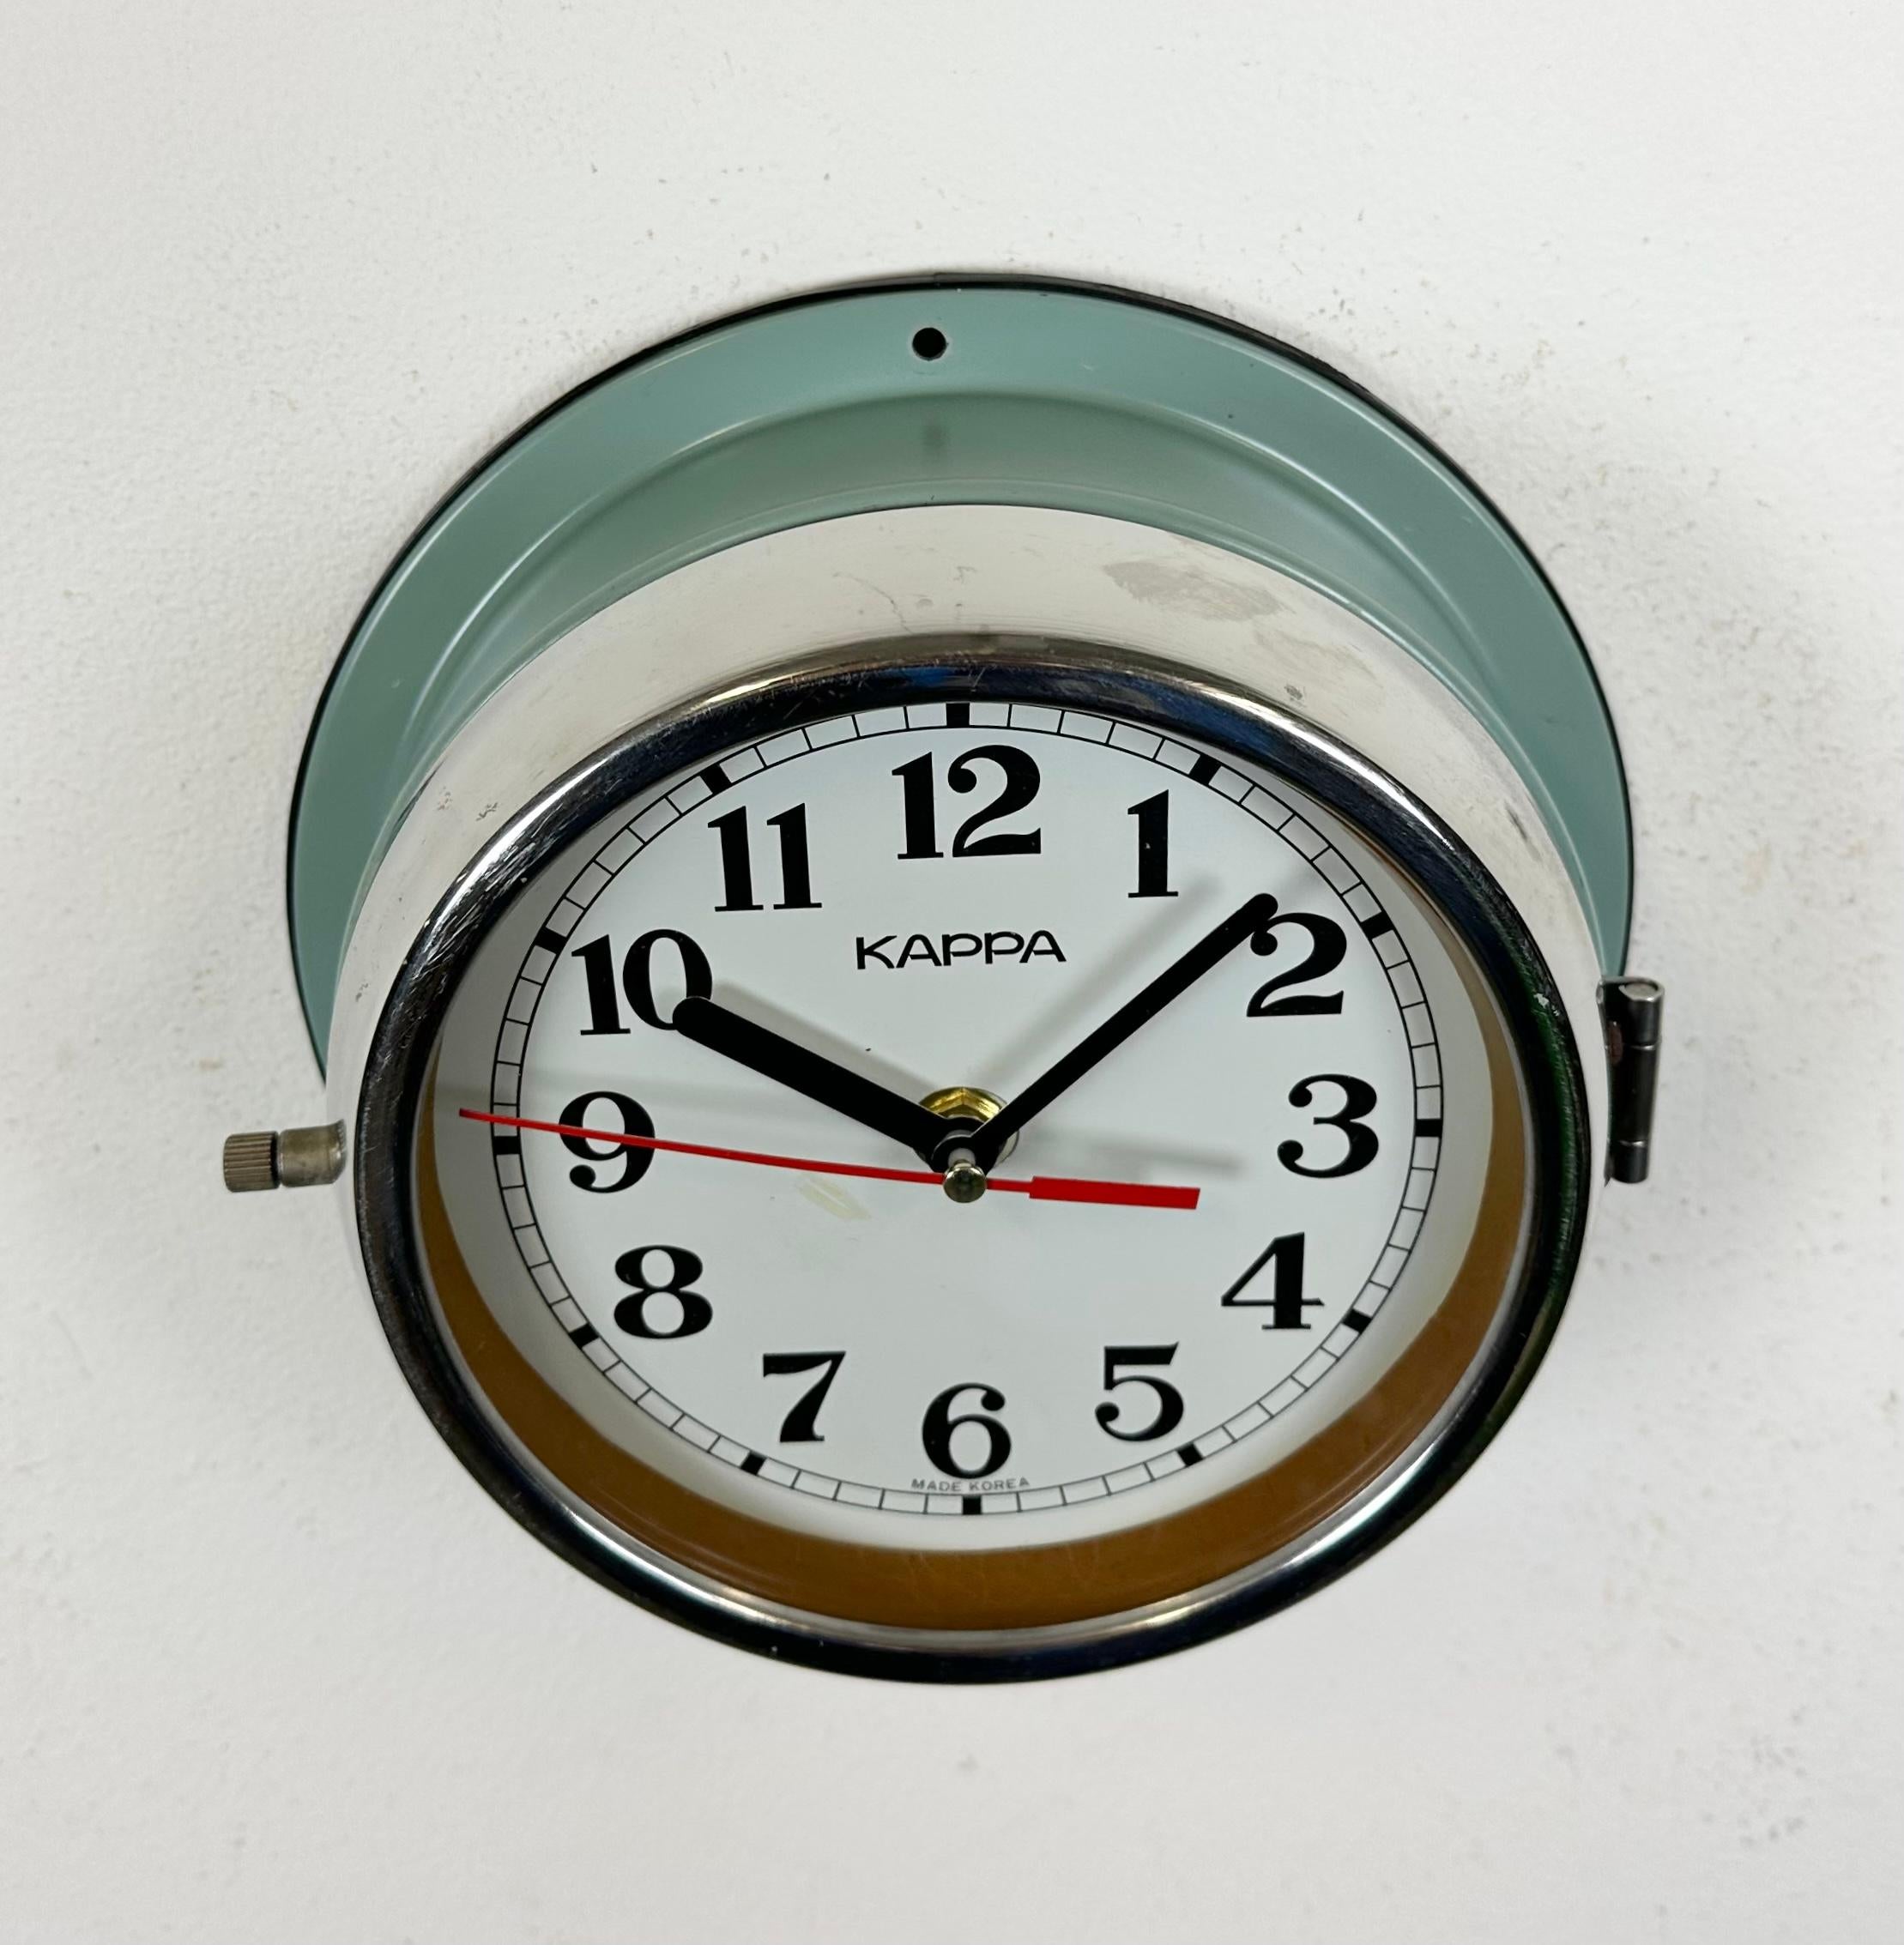 Coréen Horloge murale Kappa bleu marine vintage, années 1980 en vente